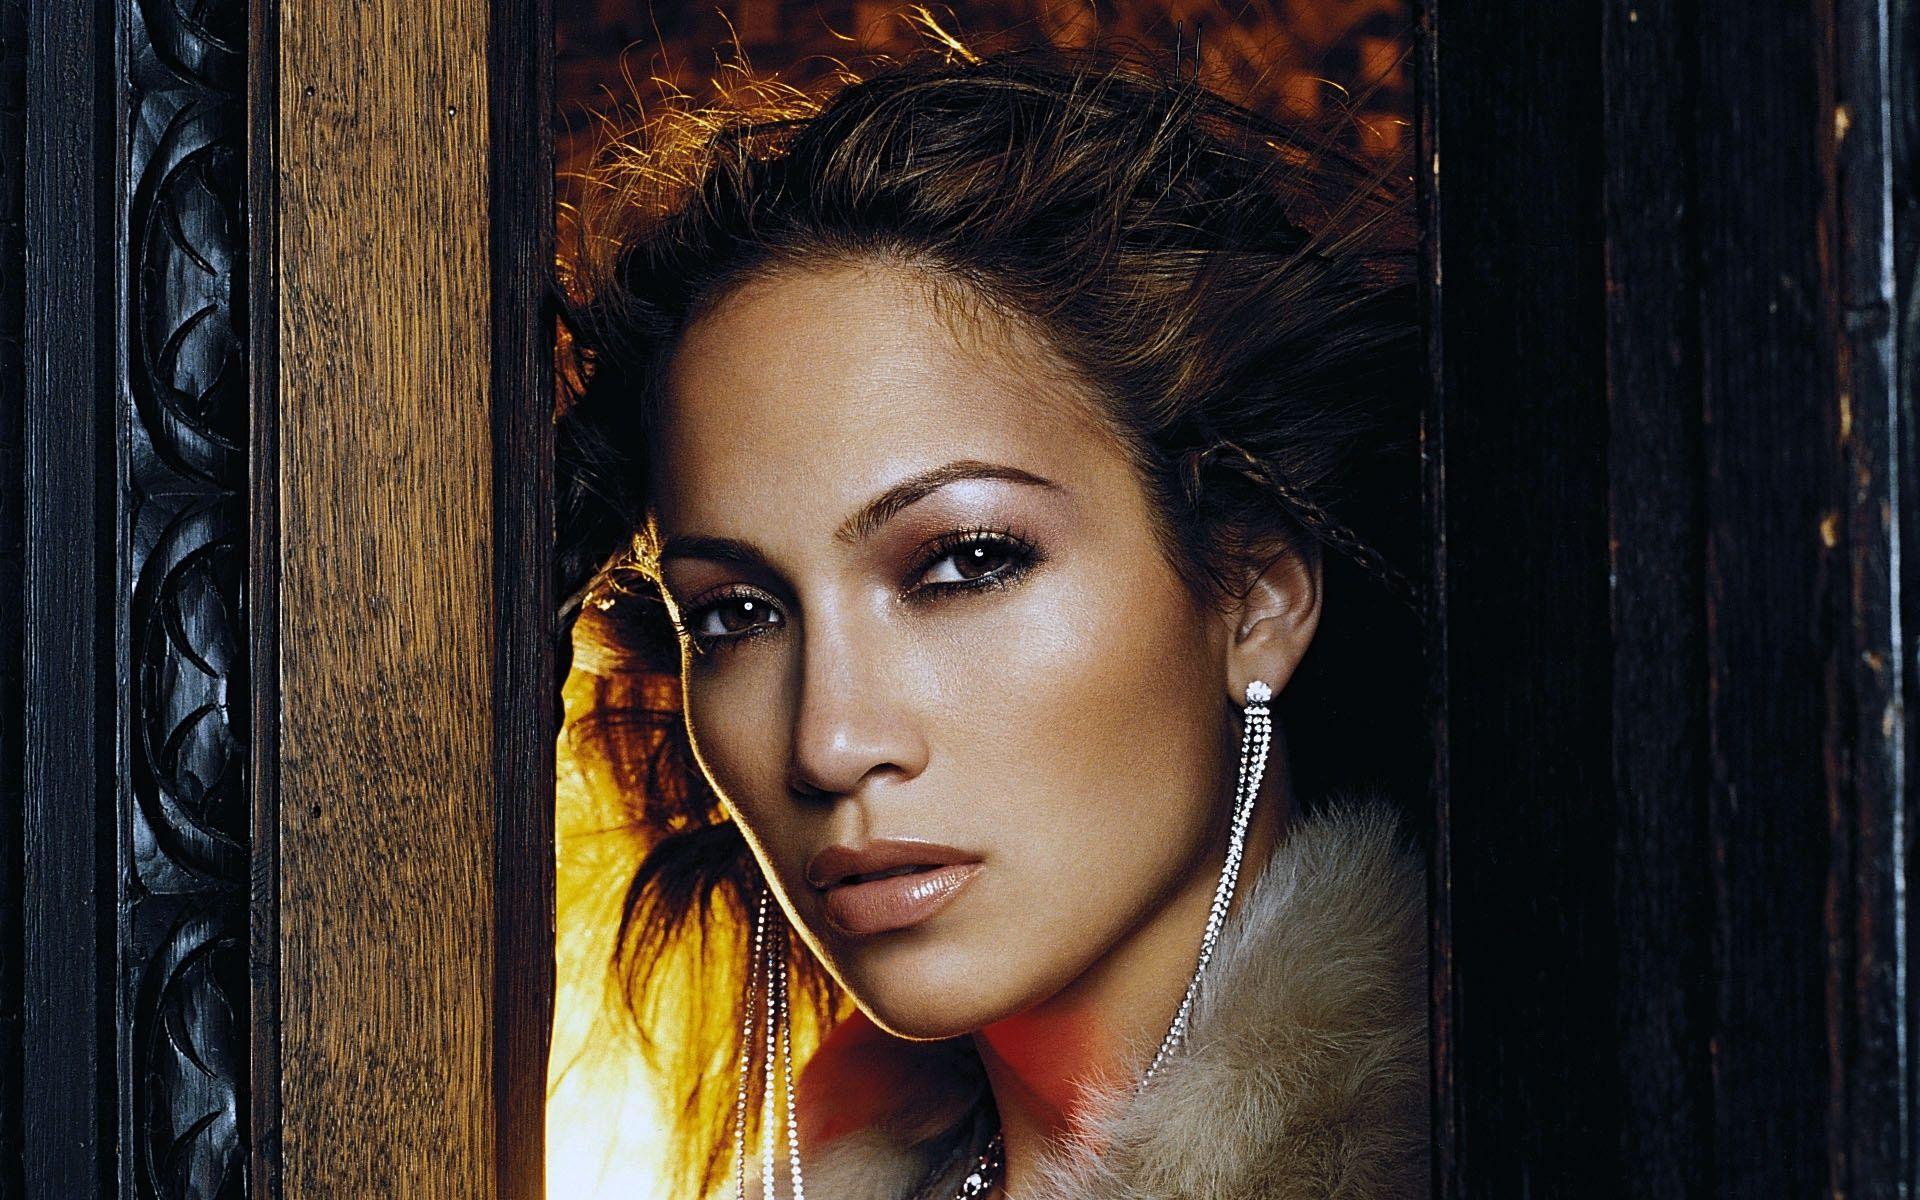 Jennifer Lopez Learns Much From “American Idol”